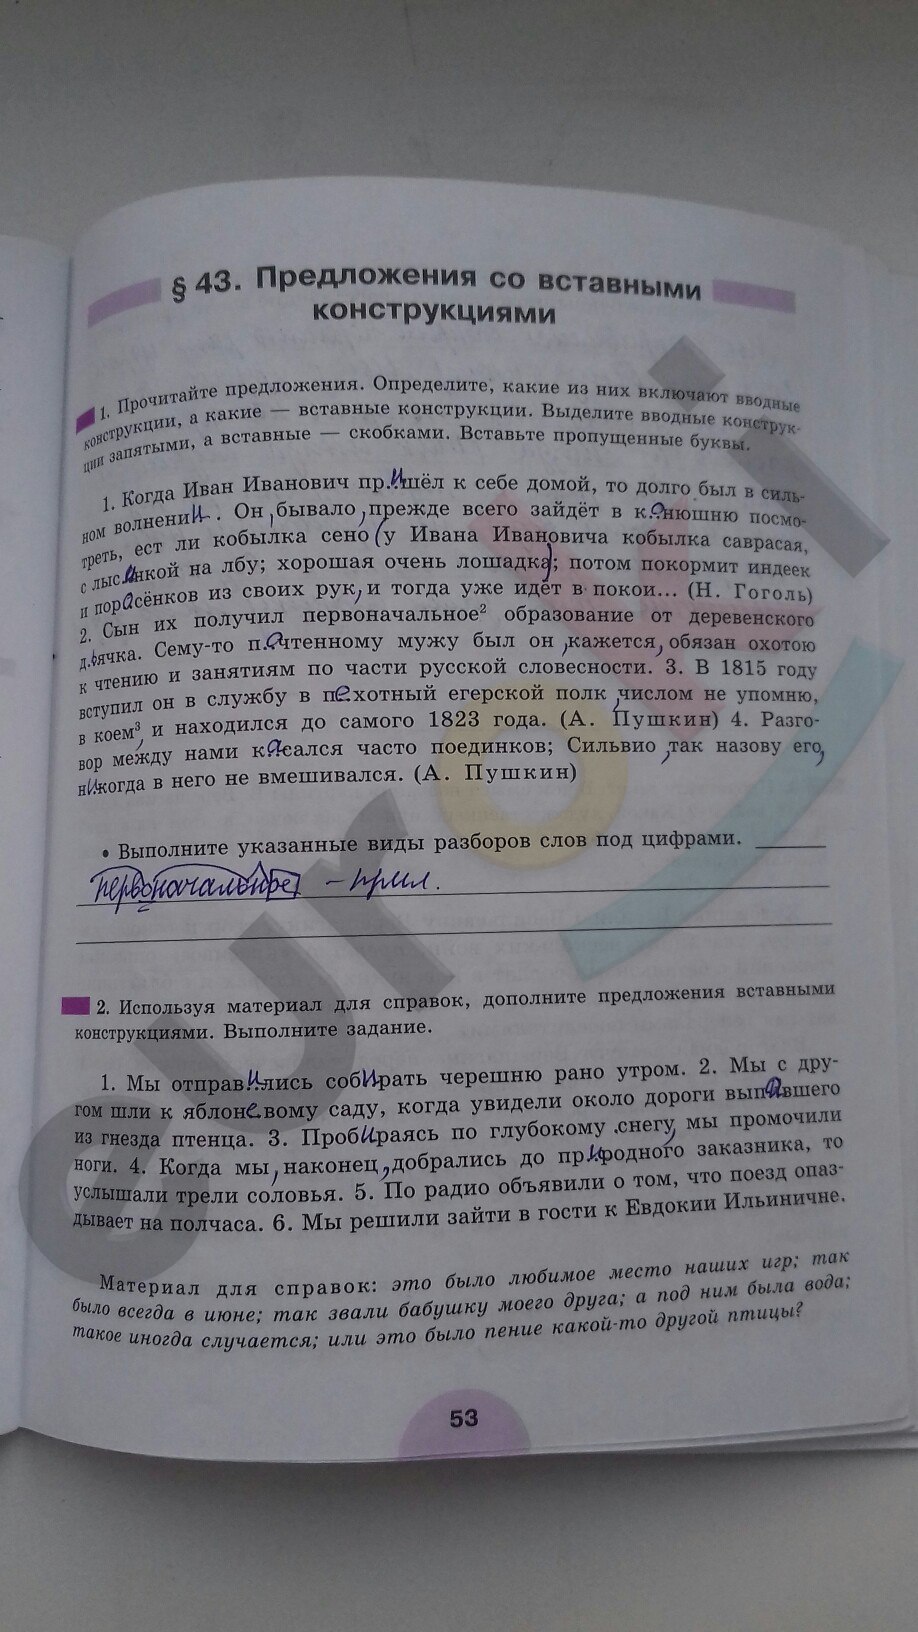 гдз 8 класс рабочая тетрадь часть 2 страница 53 русский язык Рыбченкова, Александрова